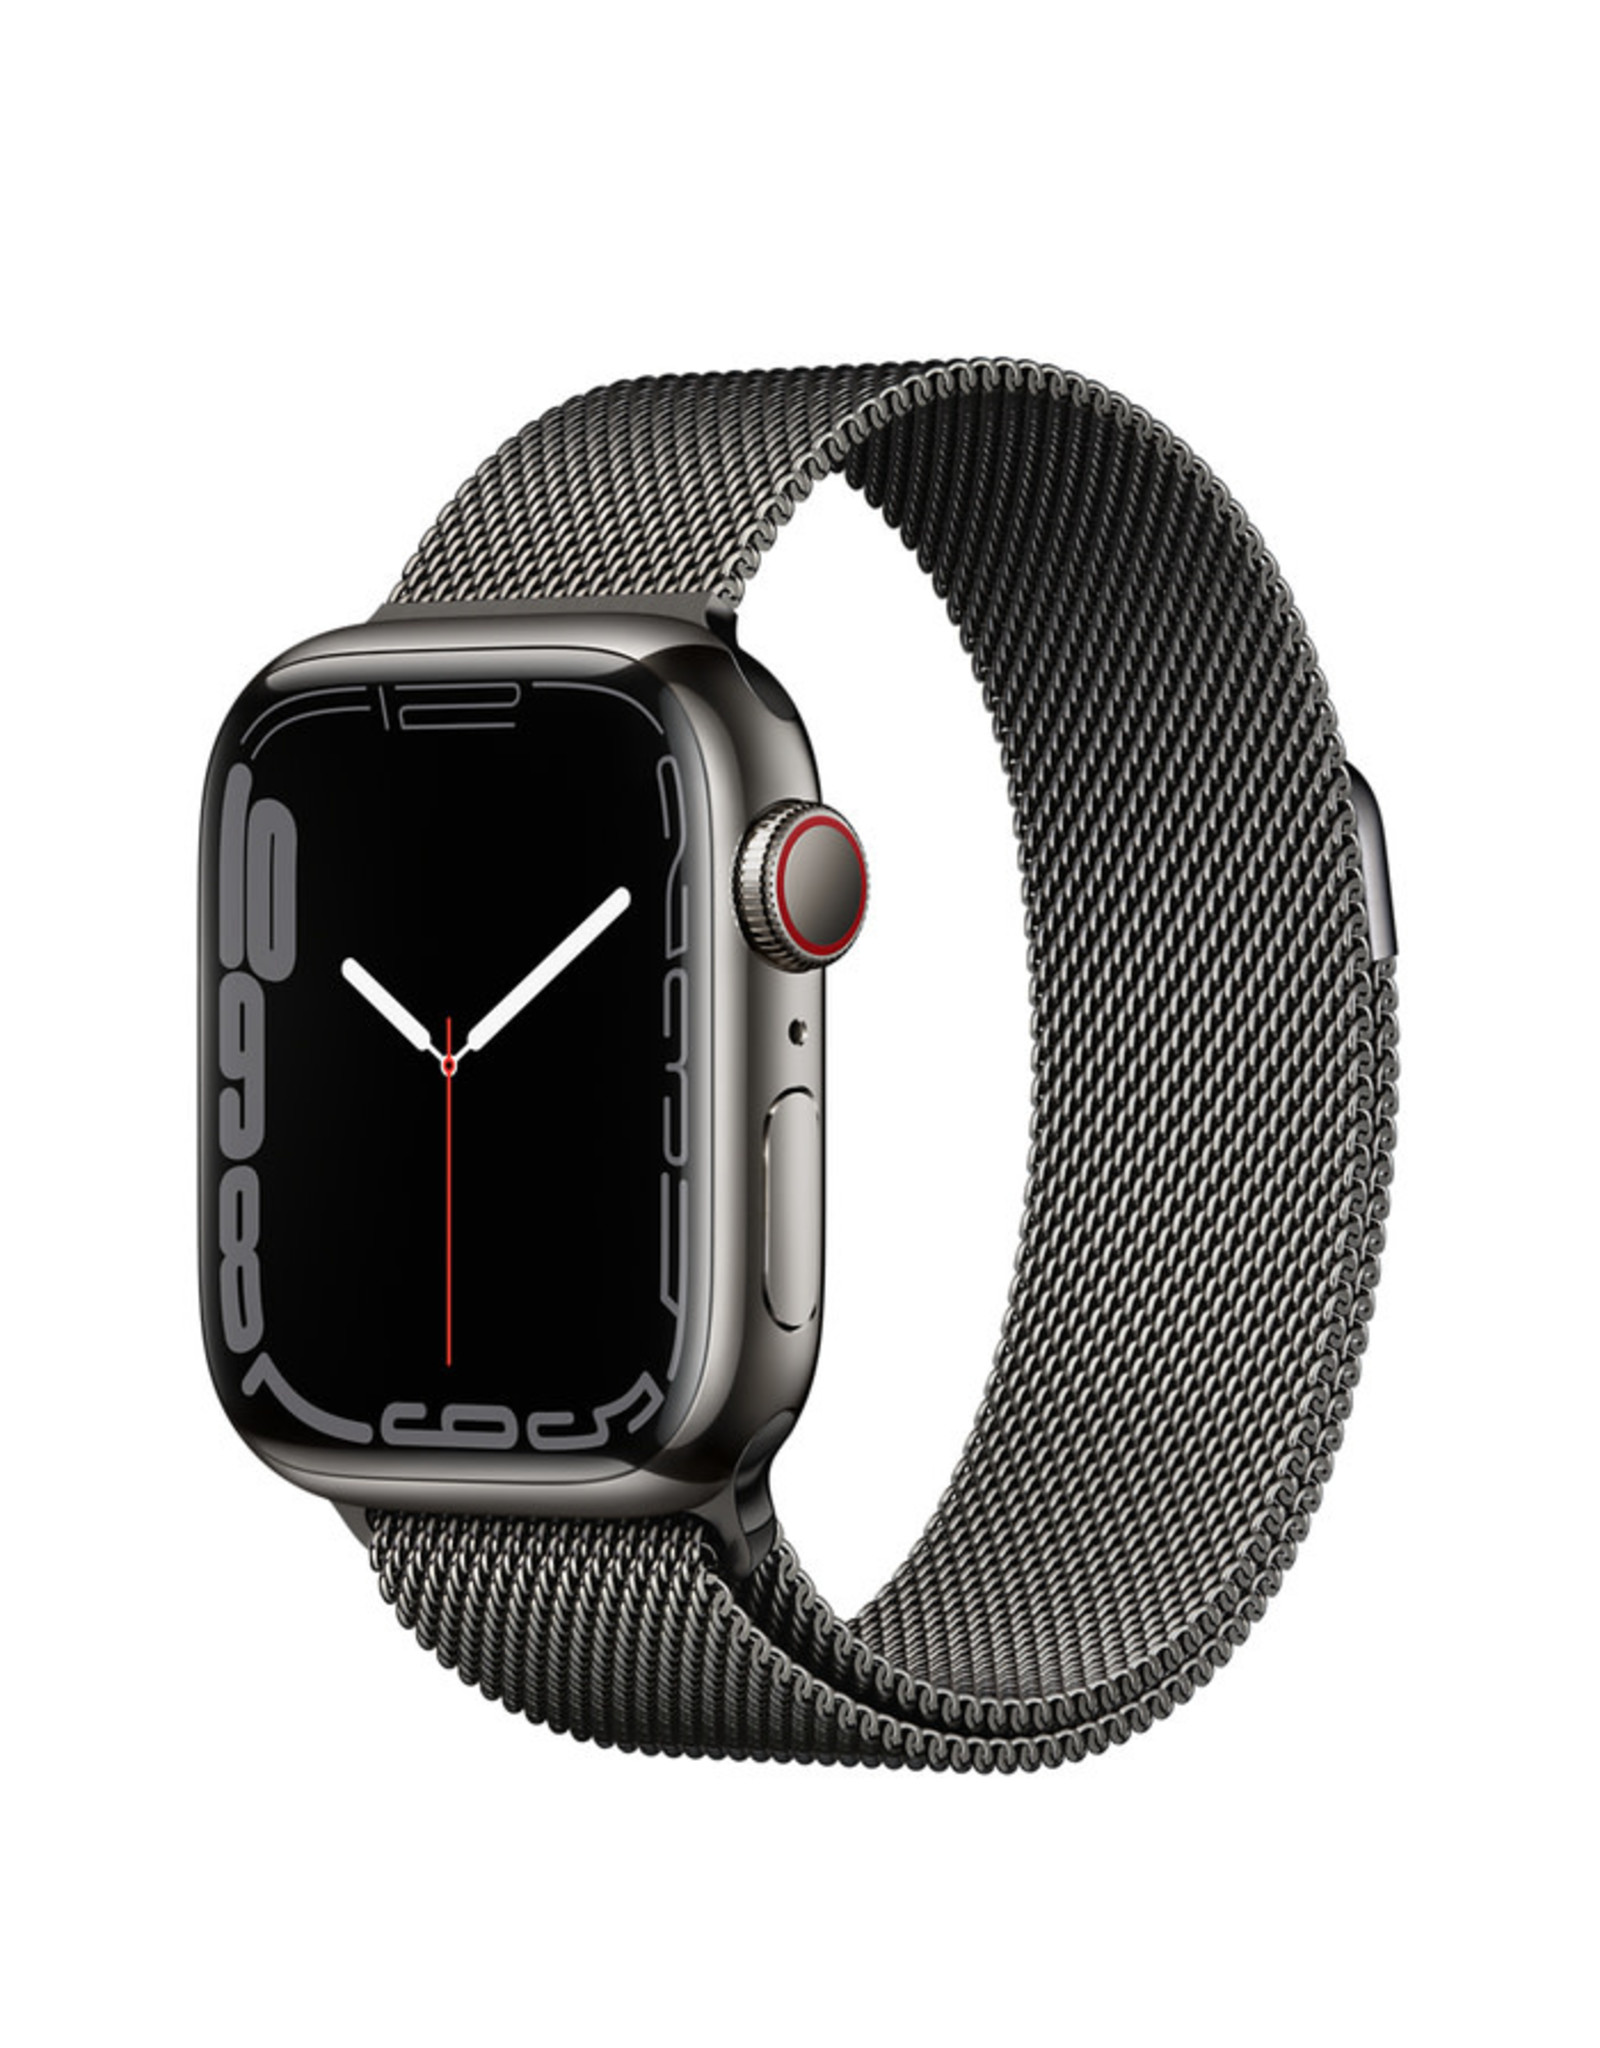 Apple Apple Watch Series 7